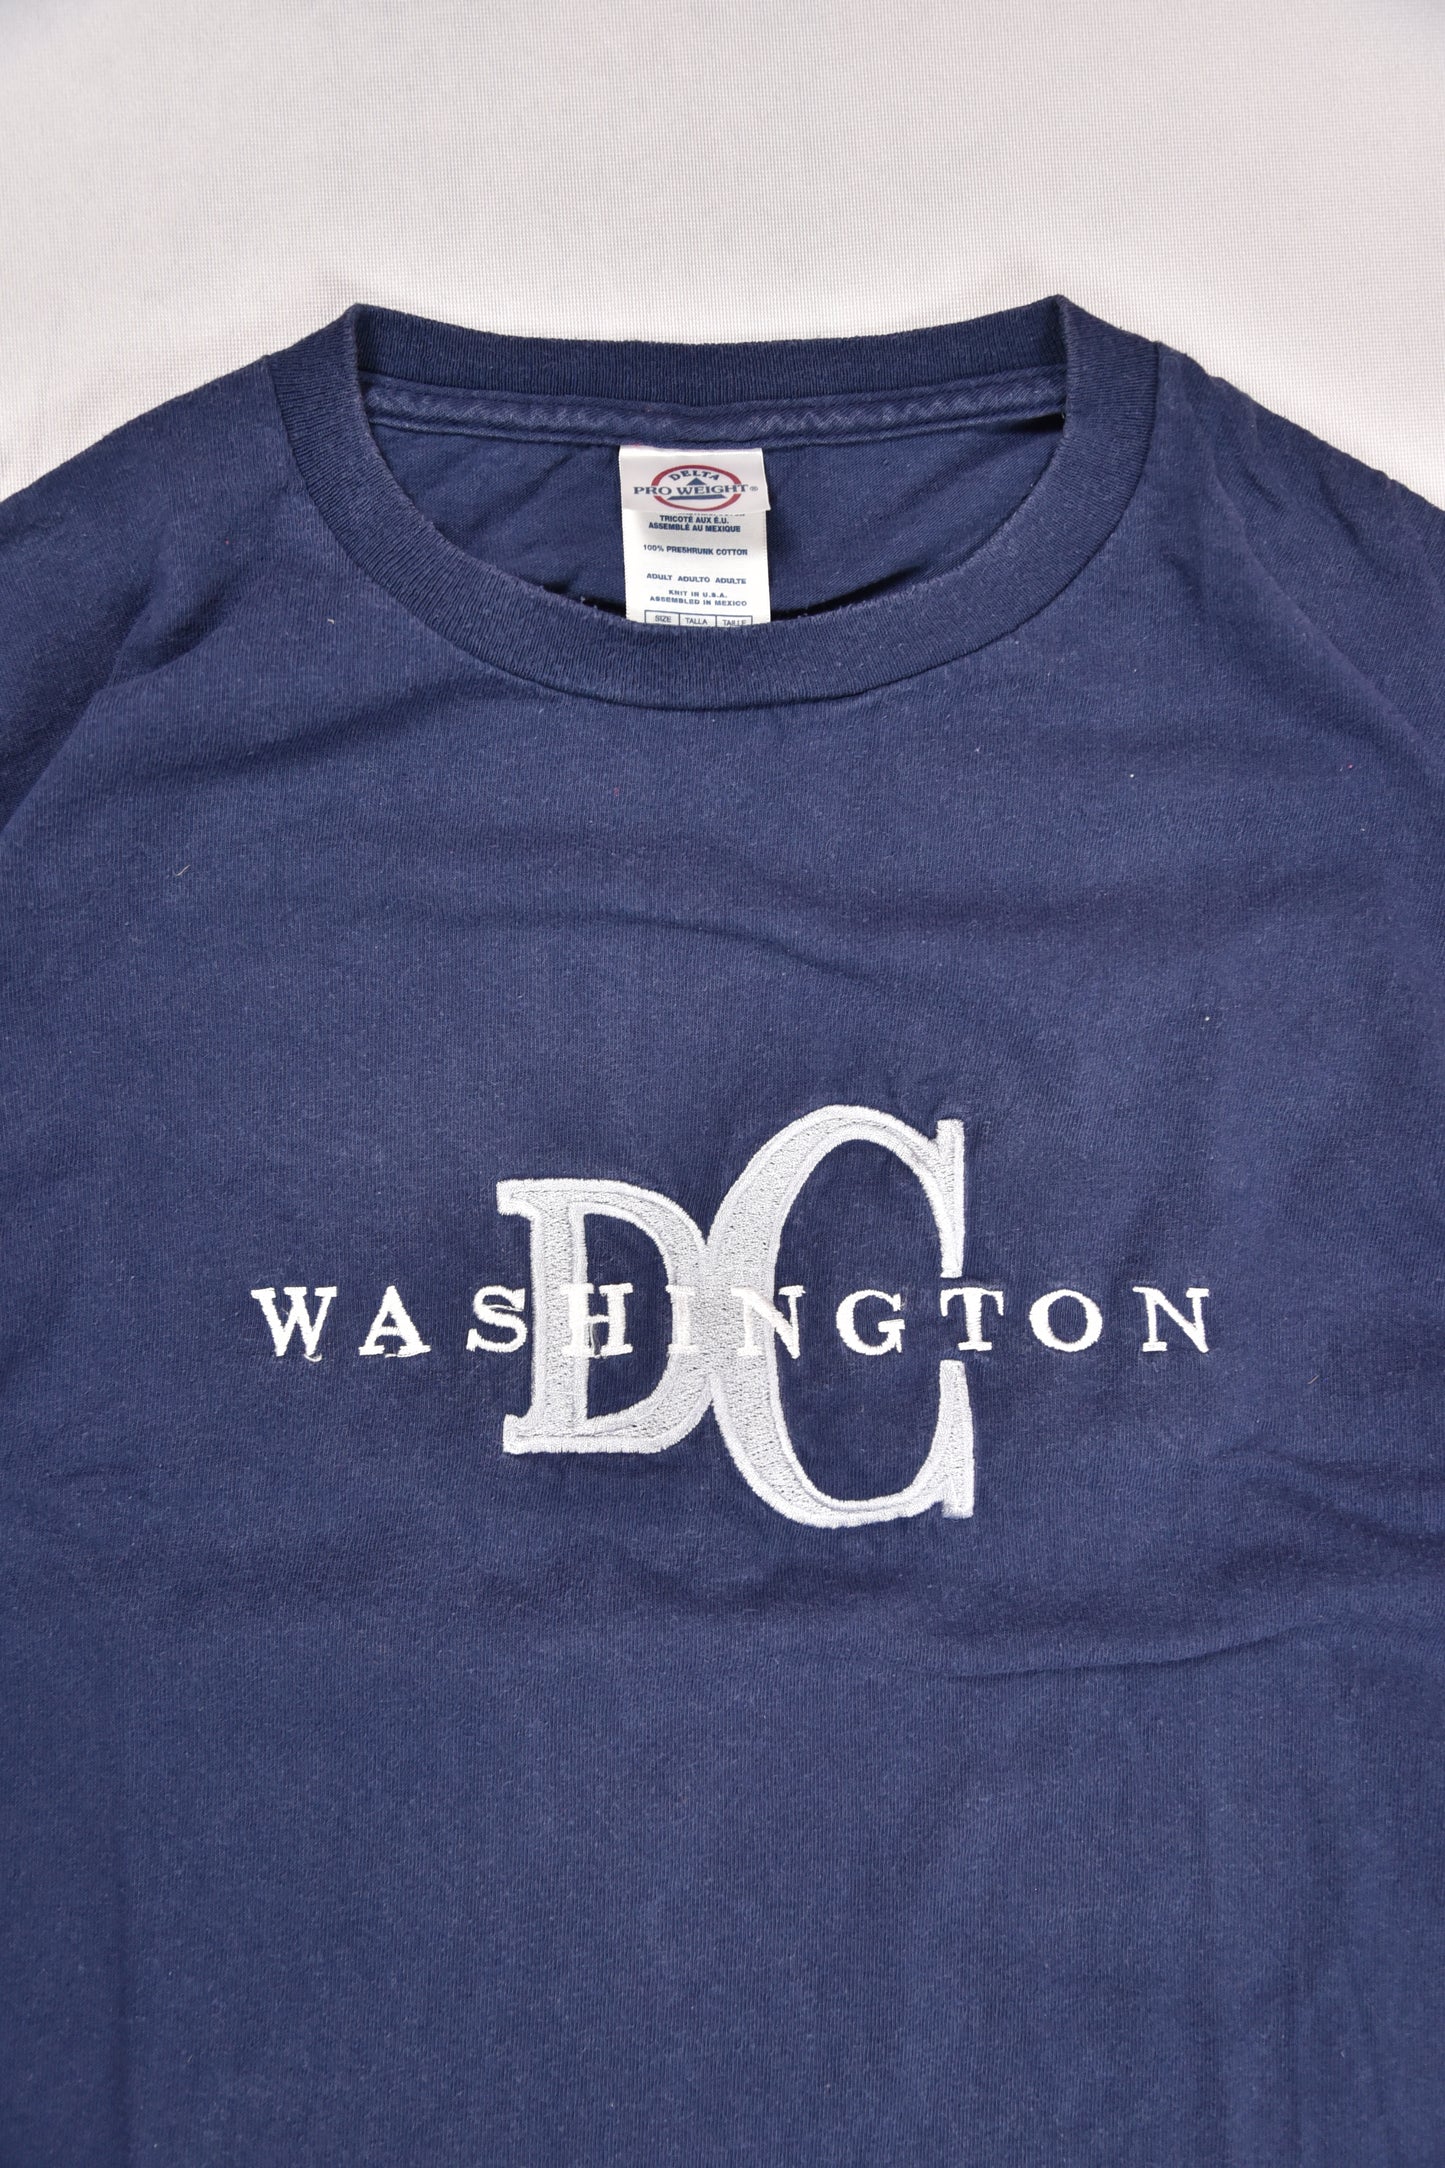 Maglietta vintage "WASHINGTON DC" / L